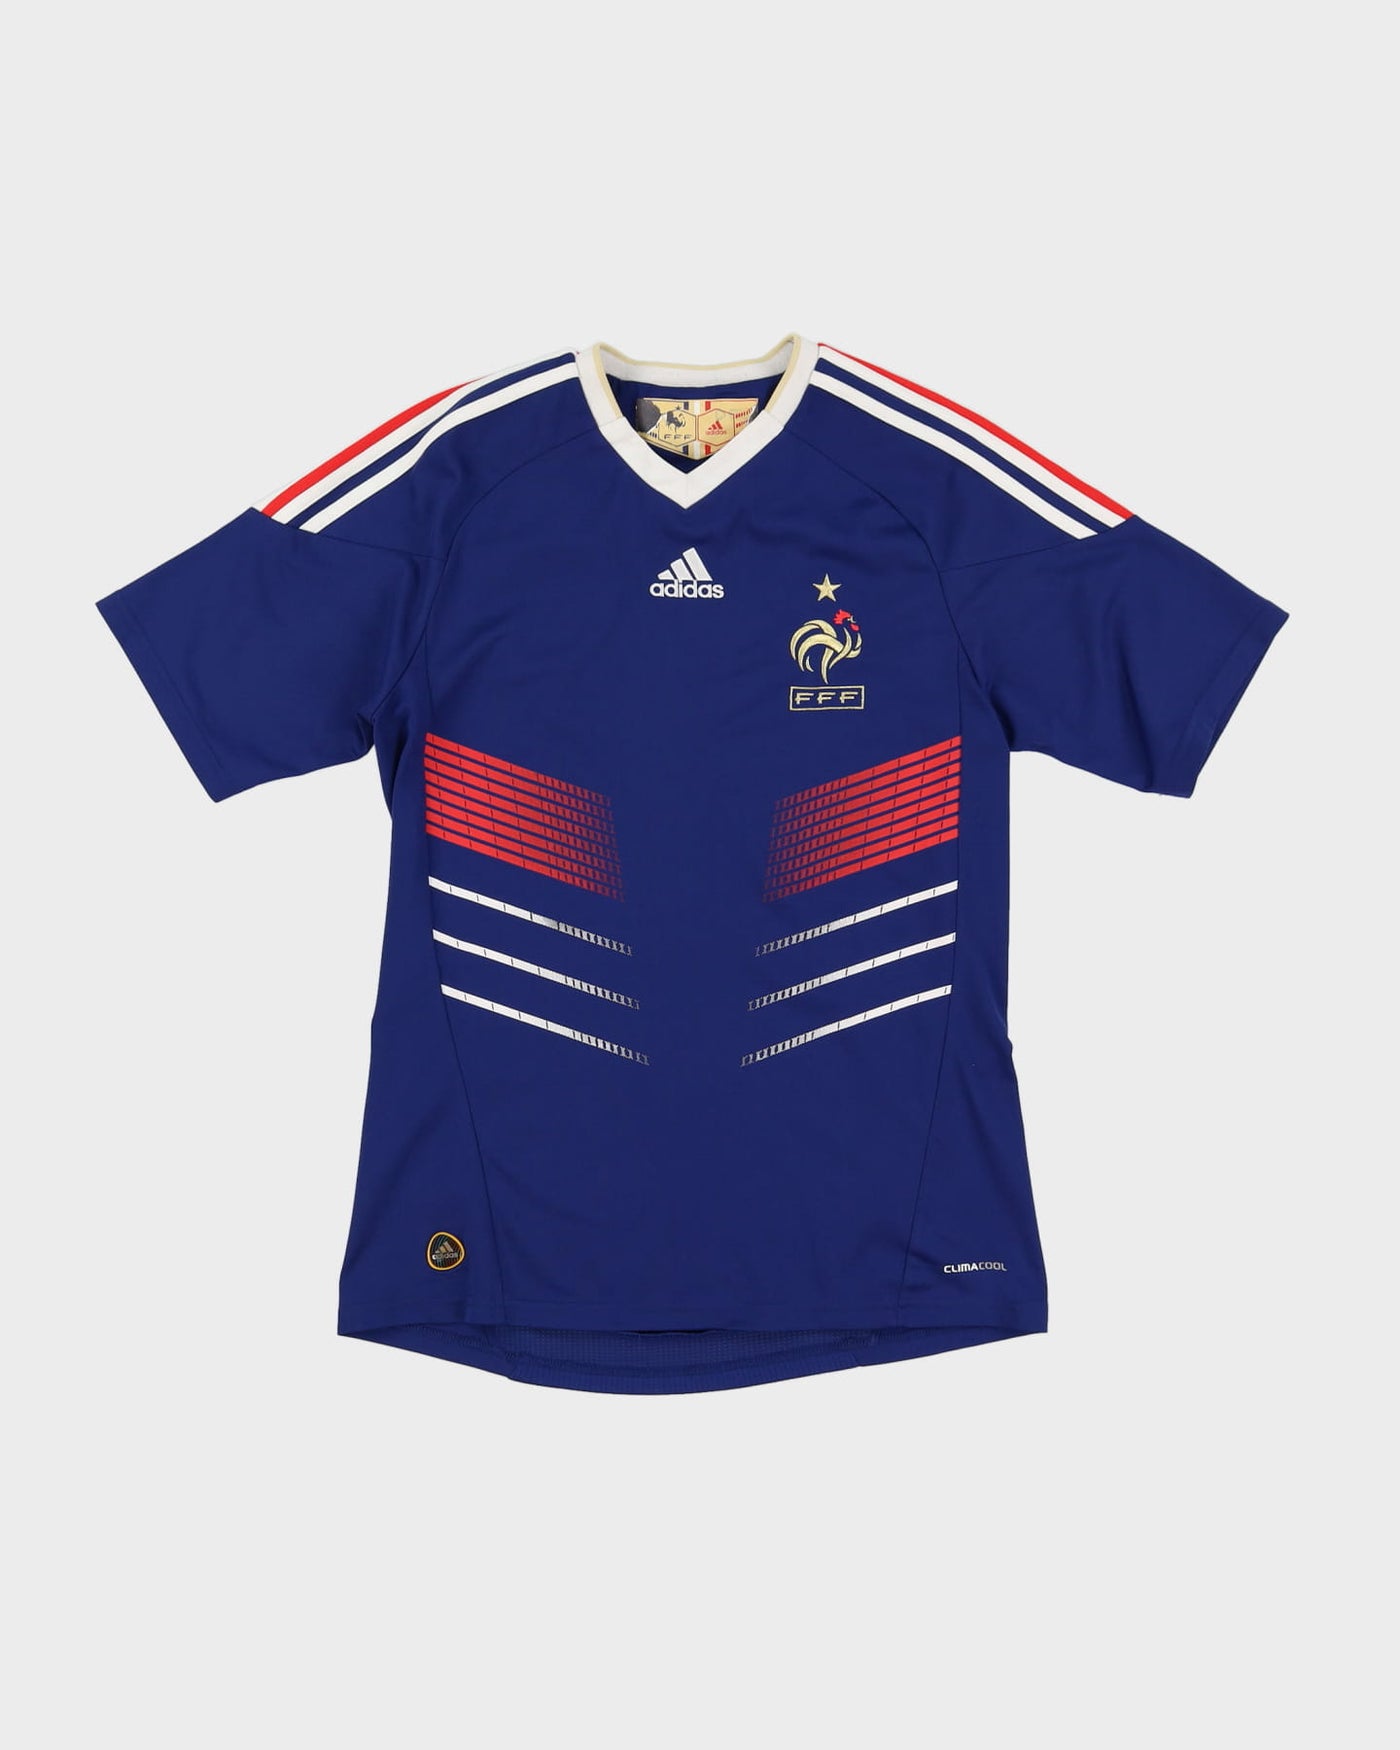 Adidas France 2009-10 National Team Football Shirt / Jersey - S